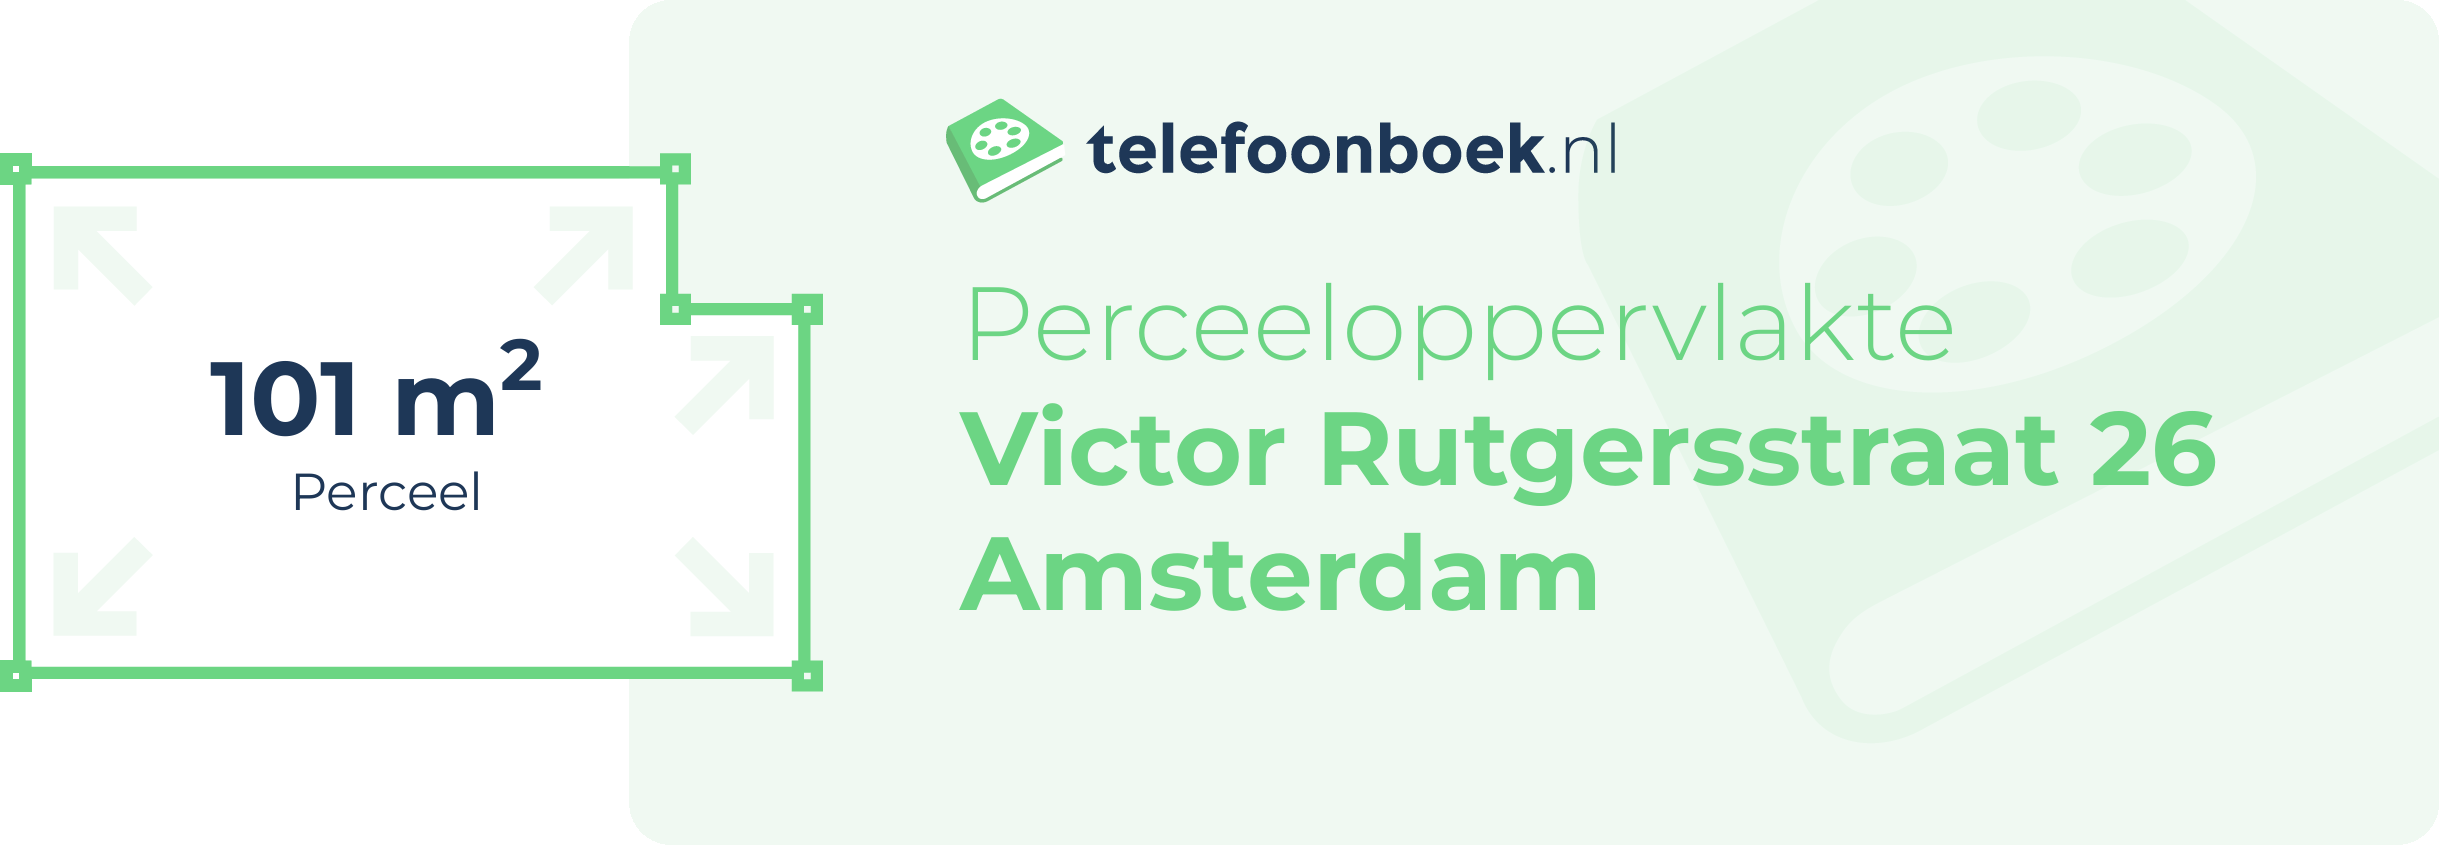 Perceeloppervlakte Victor Rutgersstraat 26 Amsterdam